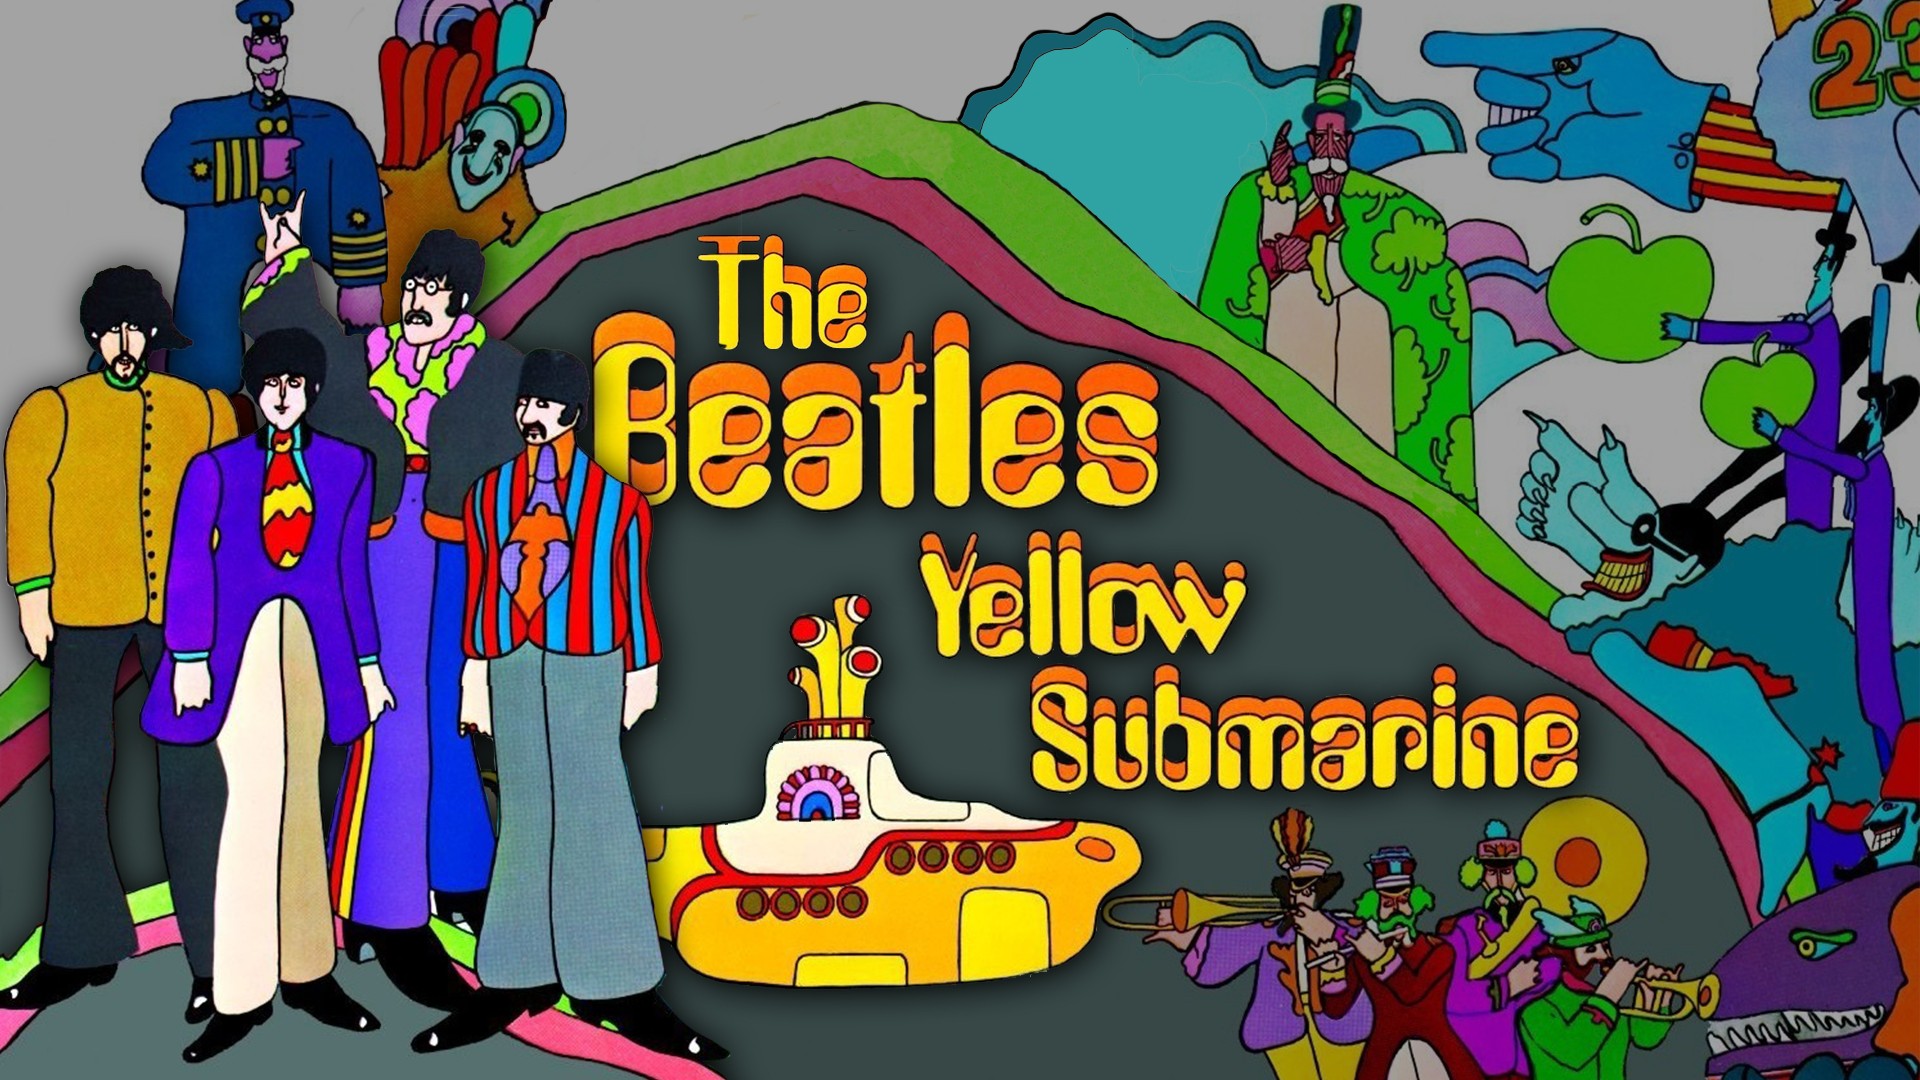 Желтая в песне битлз. Битлз: желтая подводная лодка. Битлз альбом желтая подводная лодка. The Beatles Yellow Submarine обложка альбома. Еллоу субмарин Битлз.